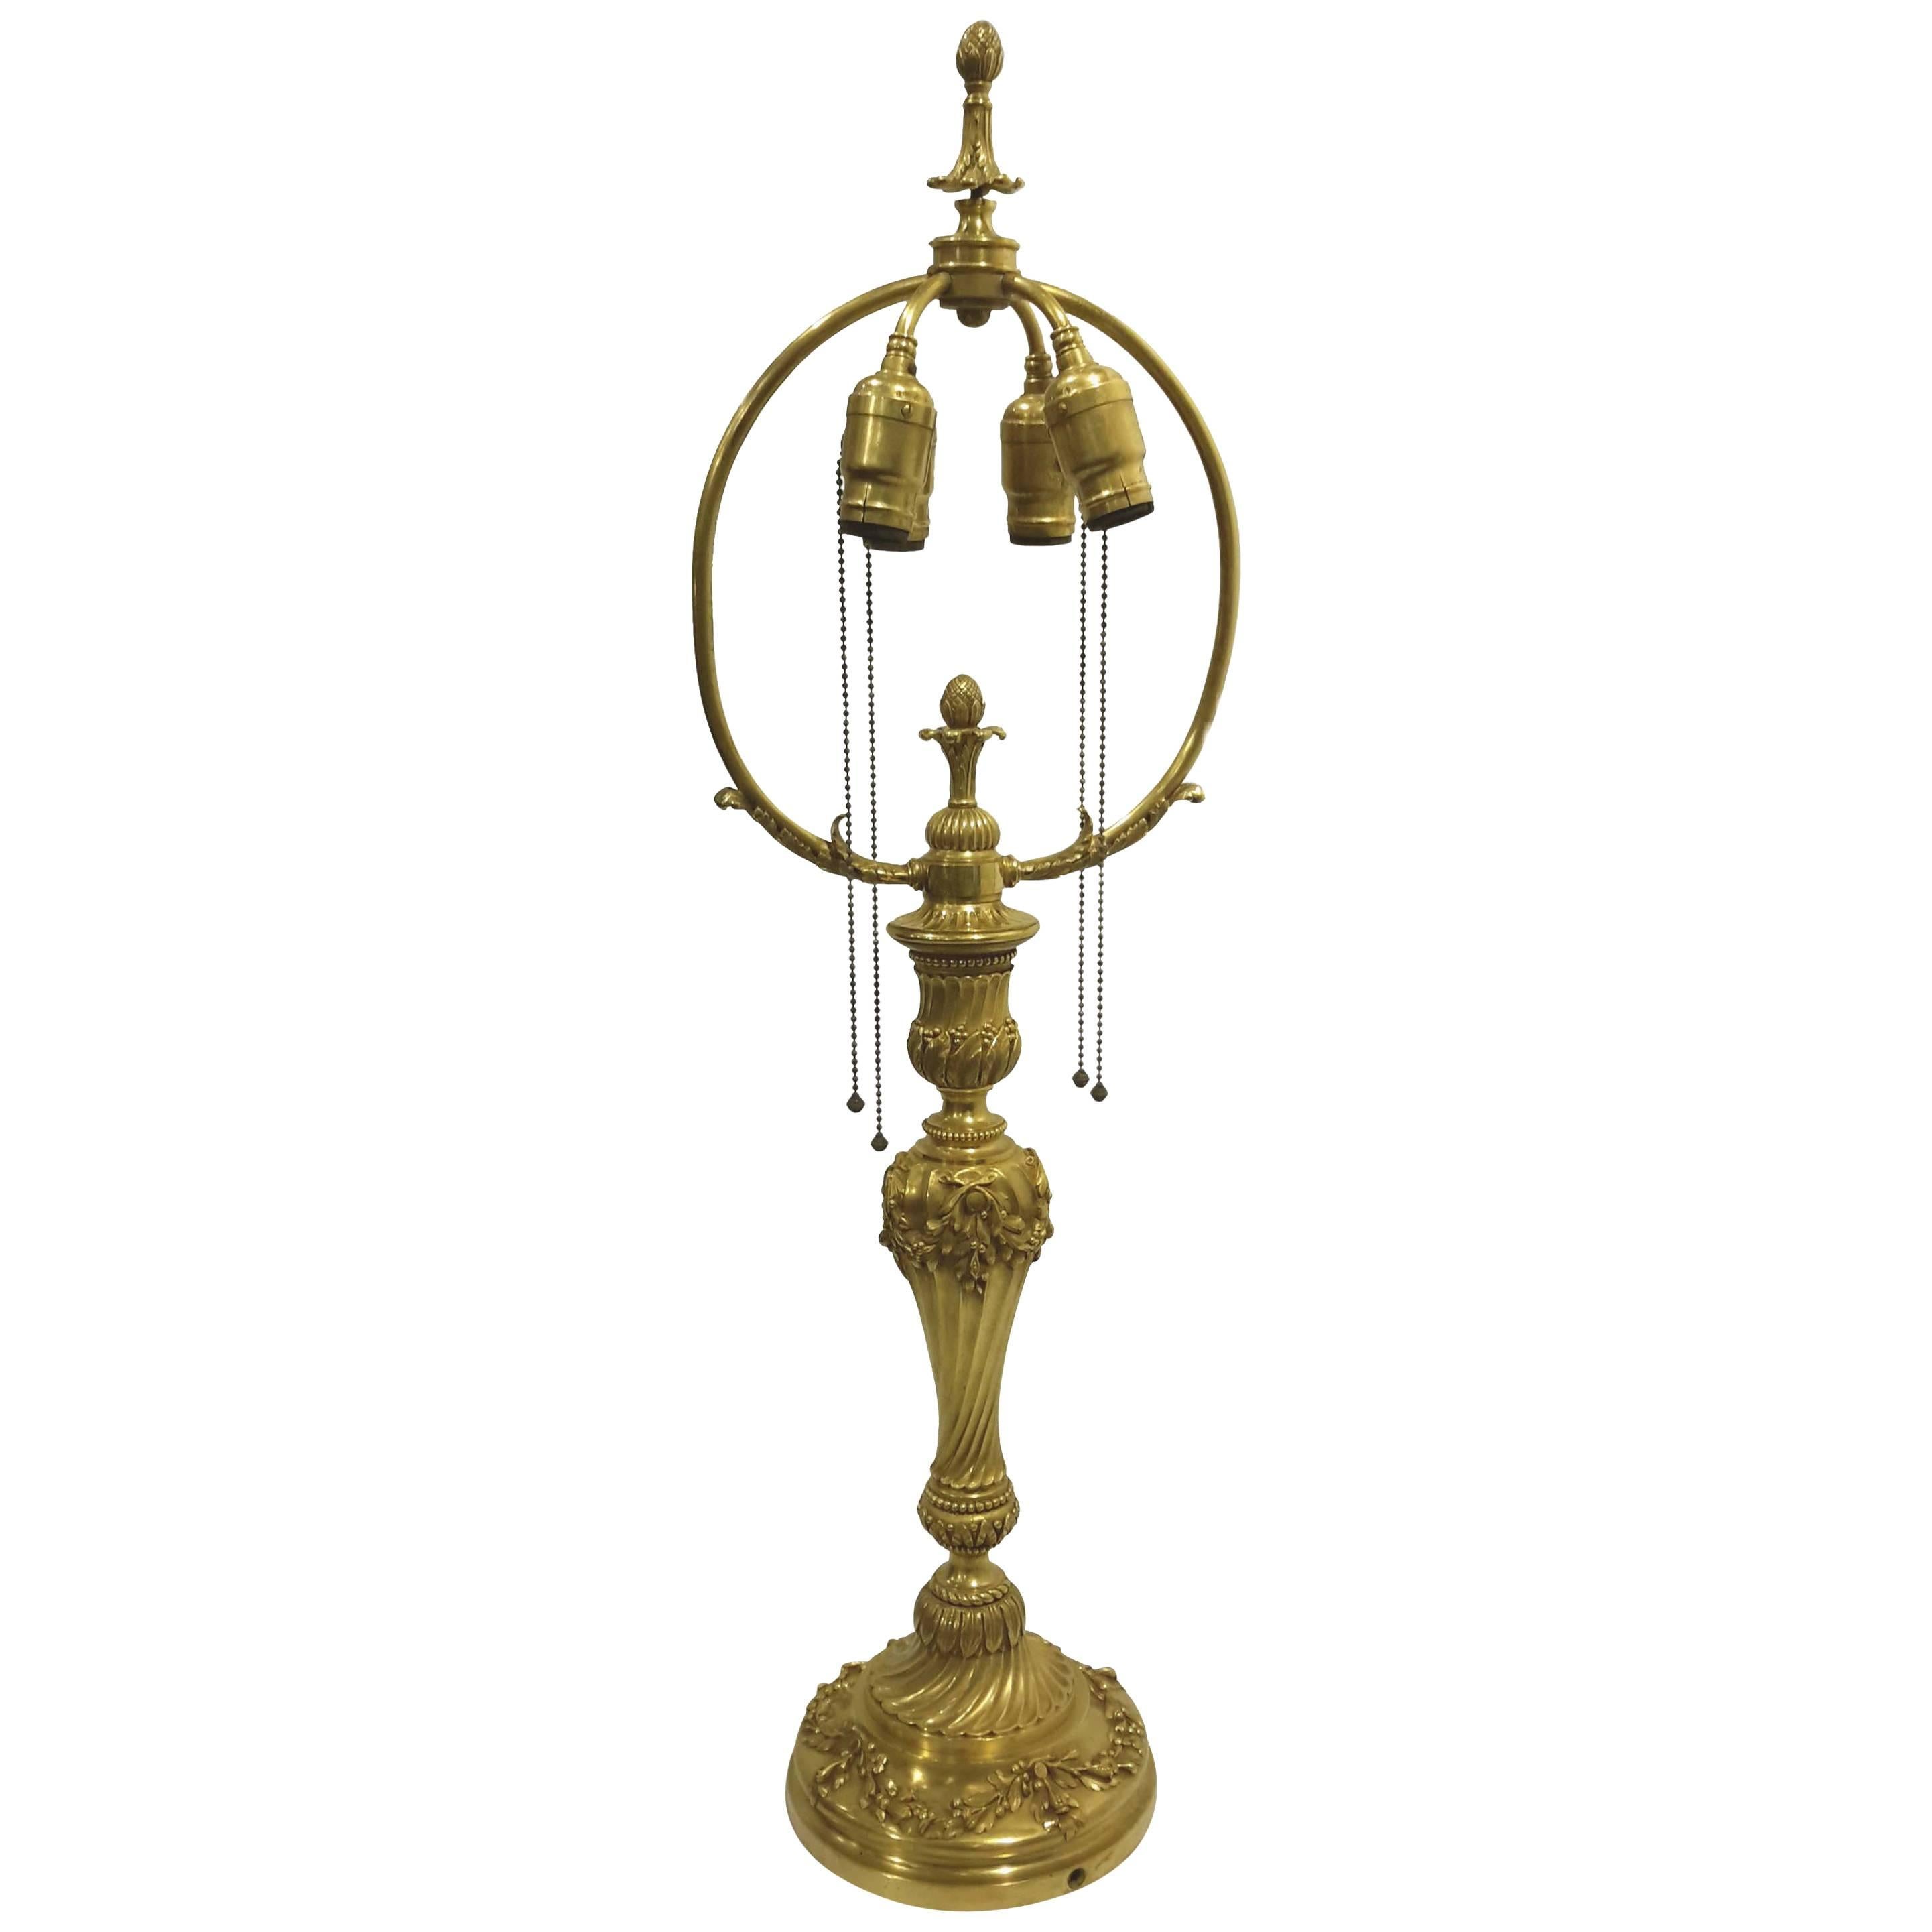 Caldwell Gilt Bronze Lamp, circa 1890